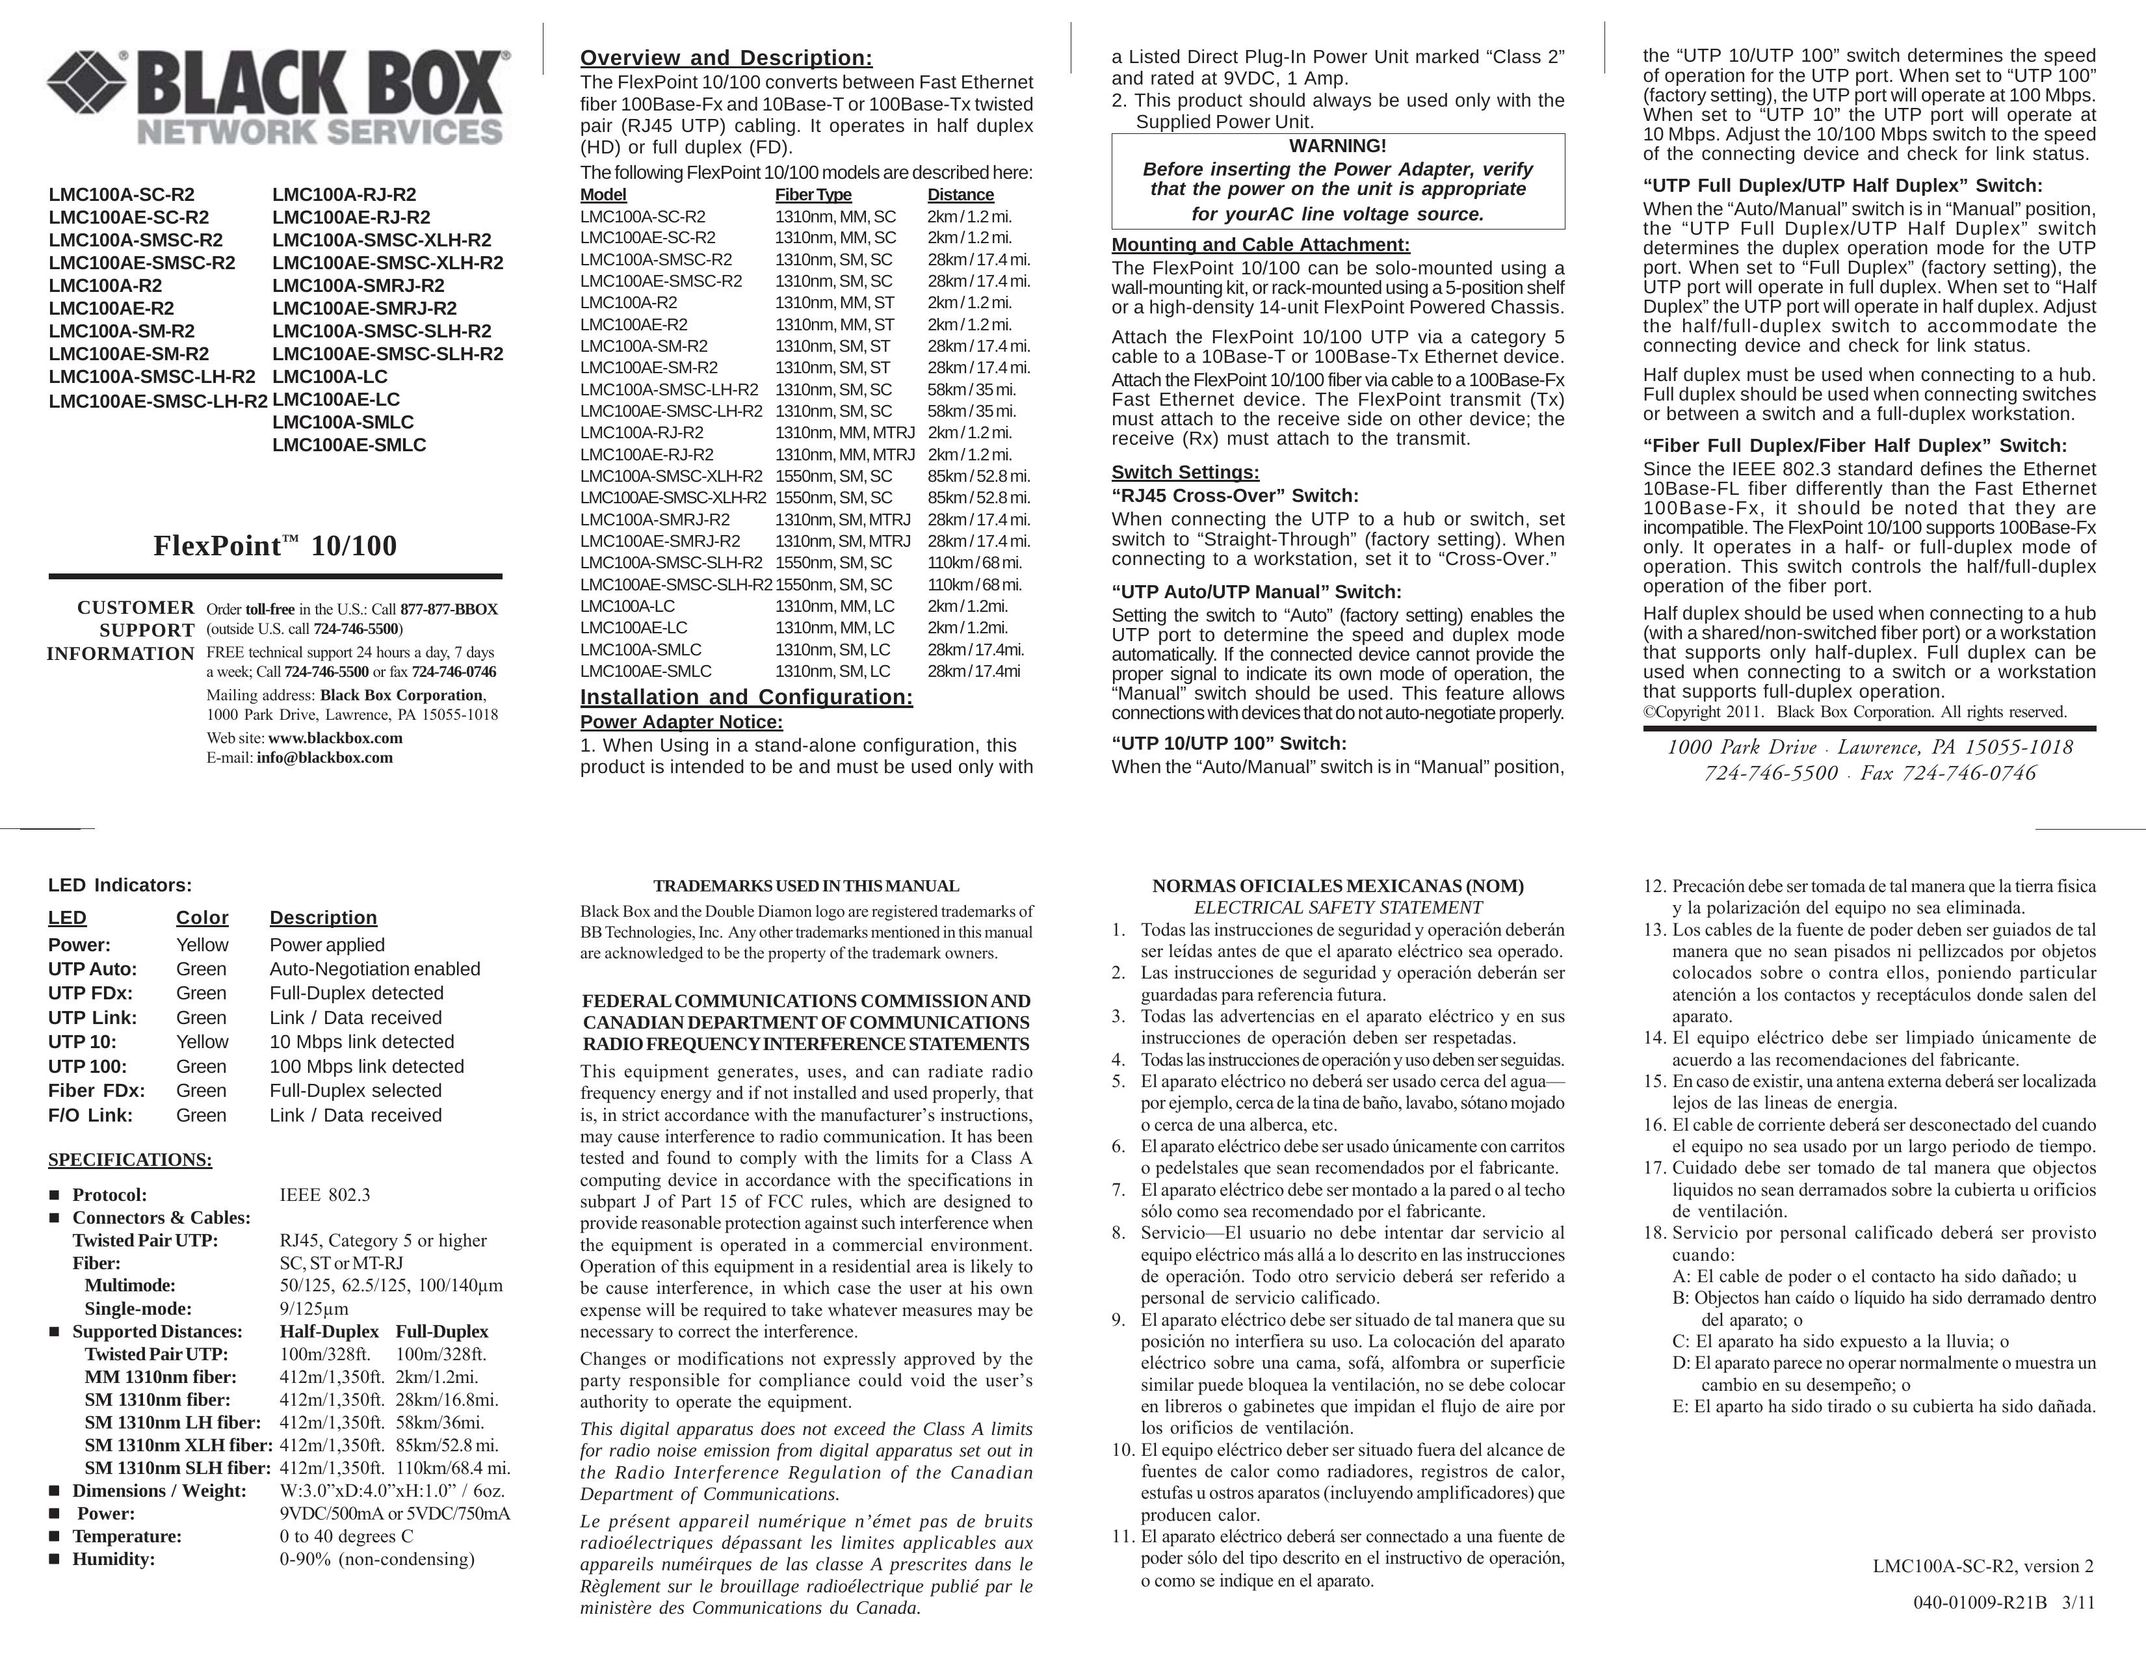 Black Box LMC100AE-SMRJ-R2 Network Cables User Manual